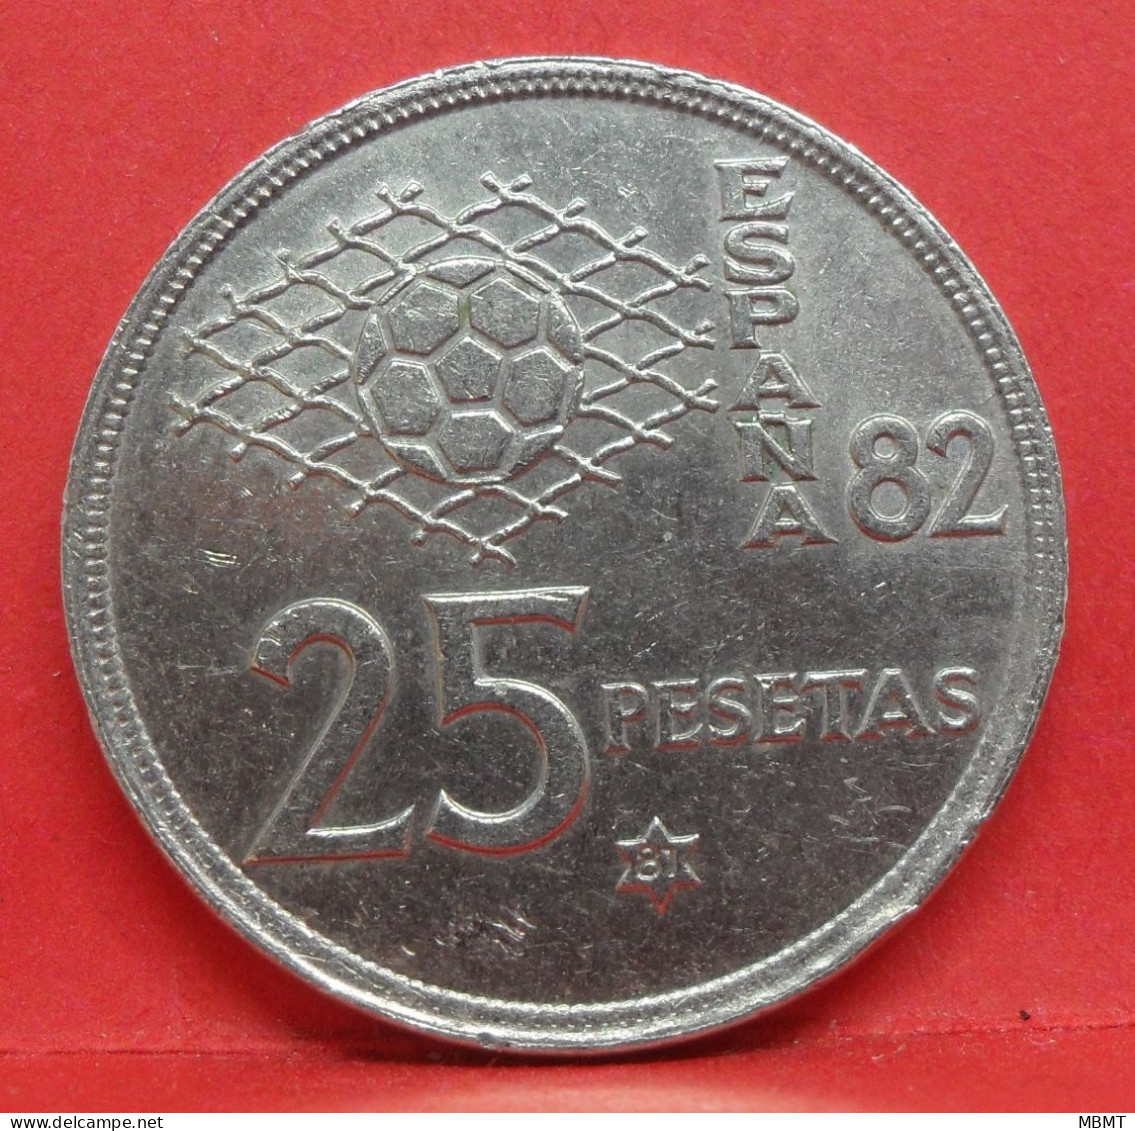 25 Pesetas 1980 étoile 81 - TTB - Pièce Monnaie Espagne - Article N°2455 - 25 Pesetas